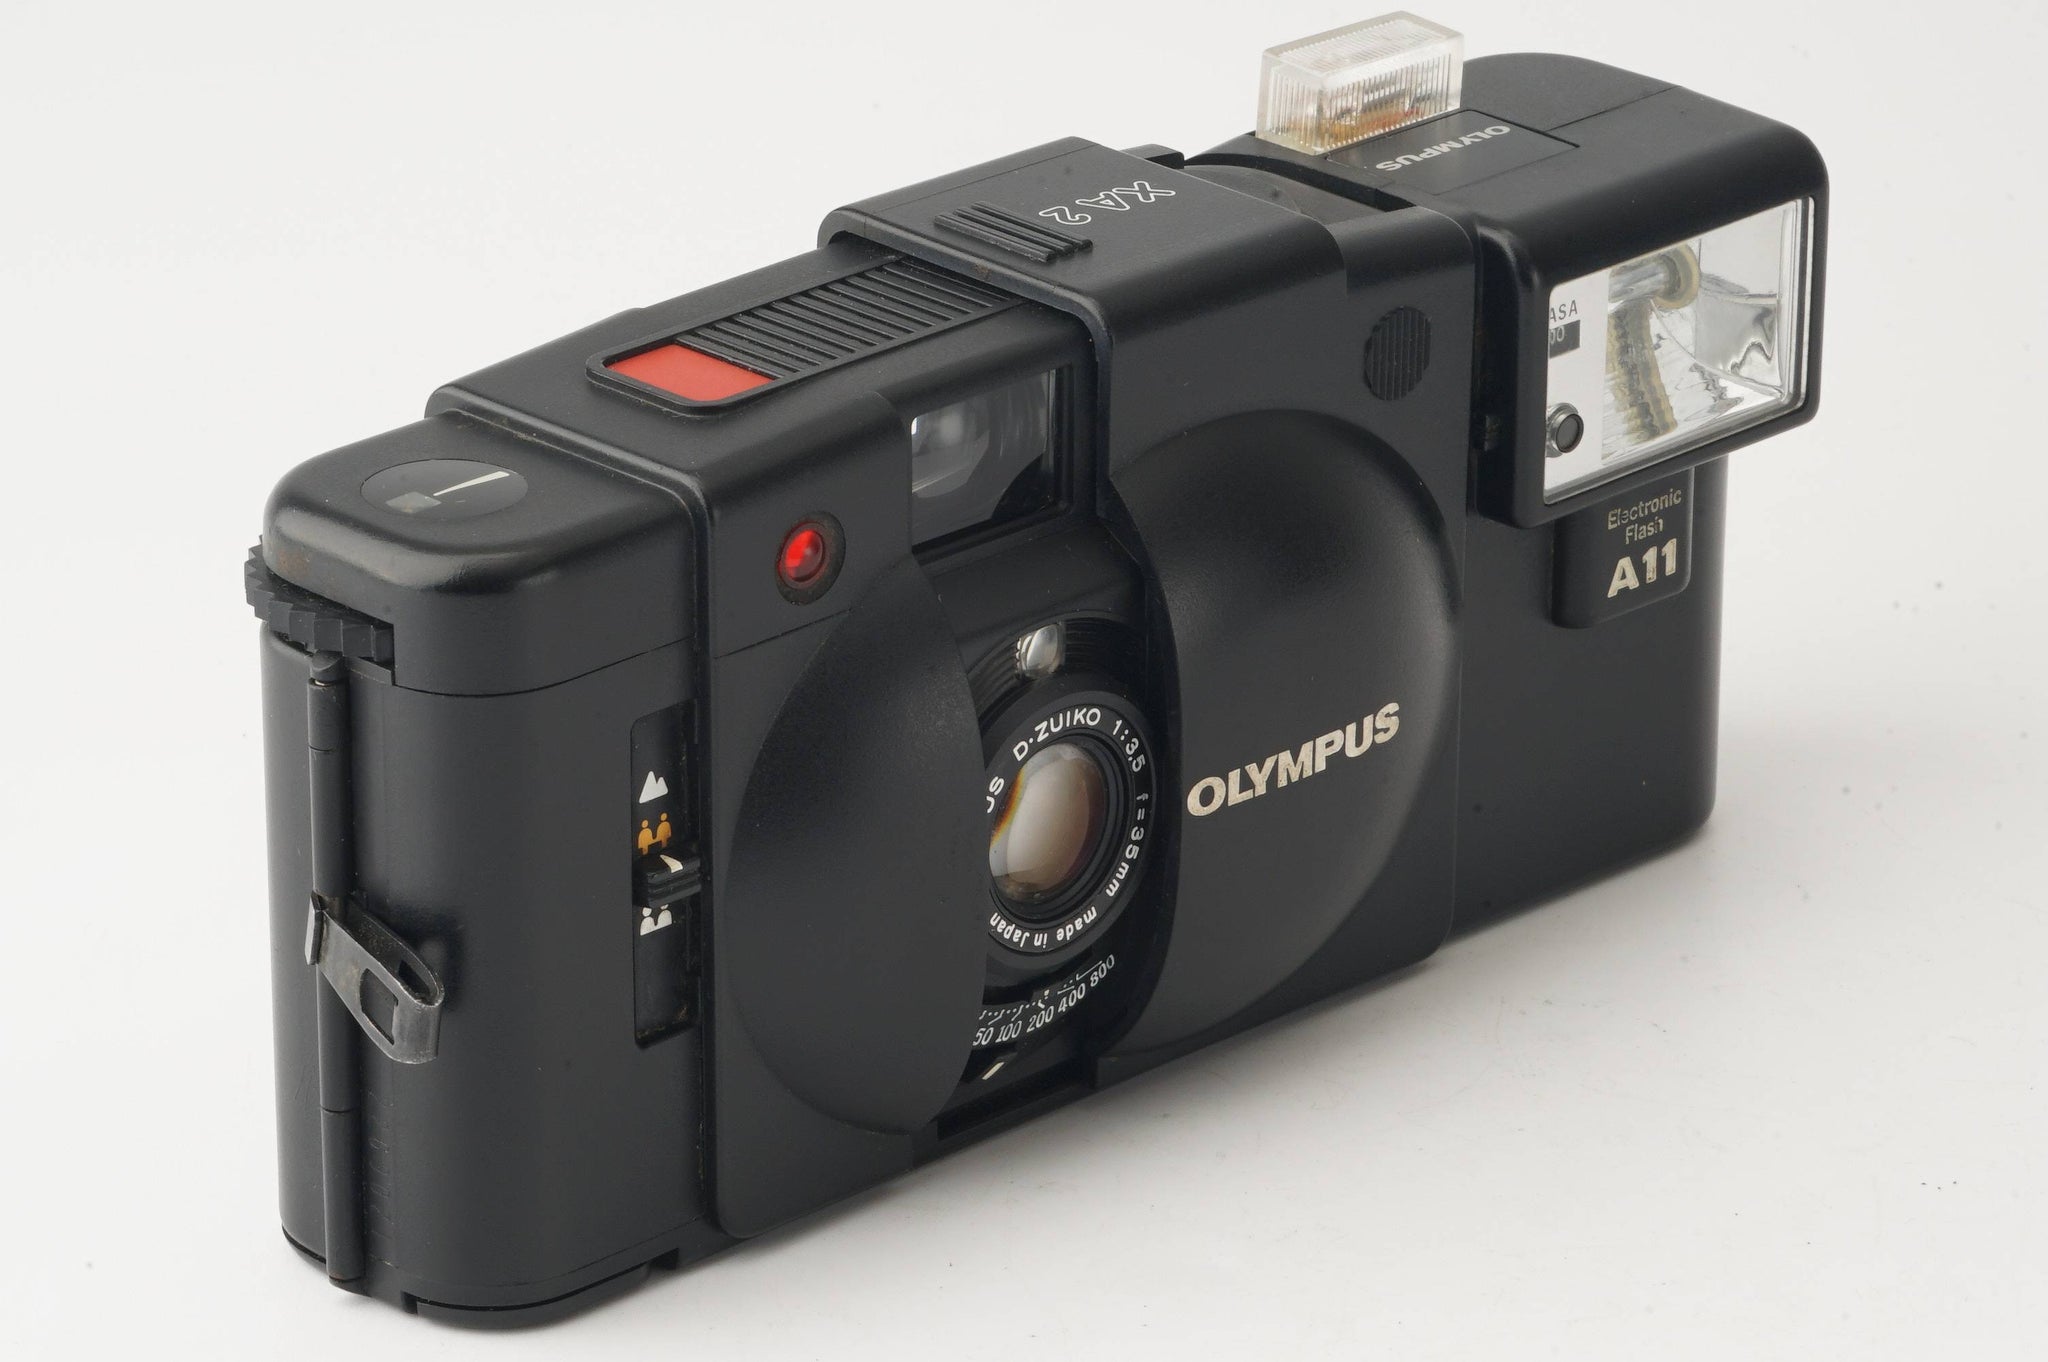 OLYMPUS XA2 ZUIKO F3.5 35mm A11カメラ - フィルムカメラ